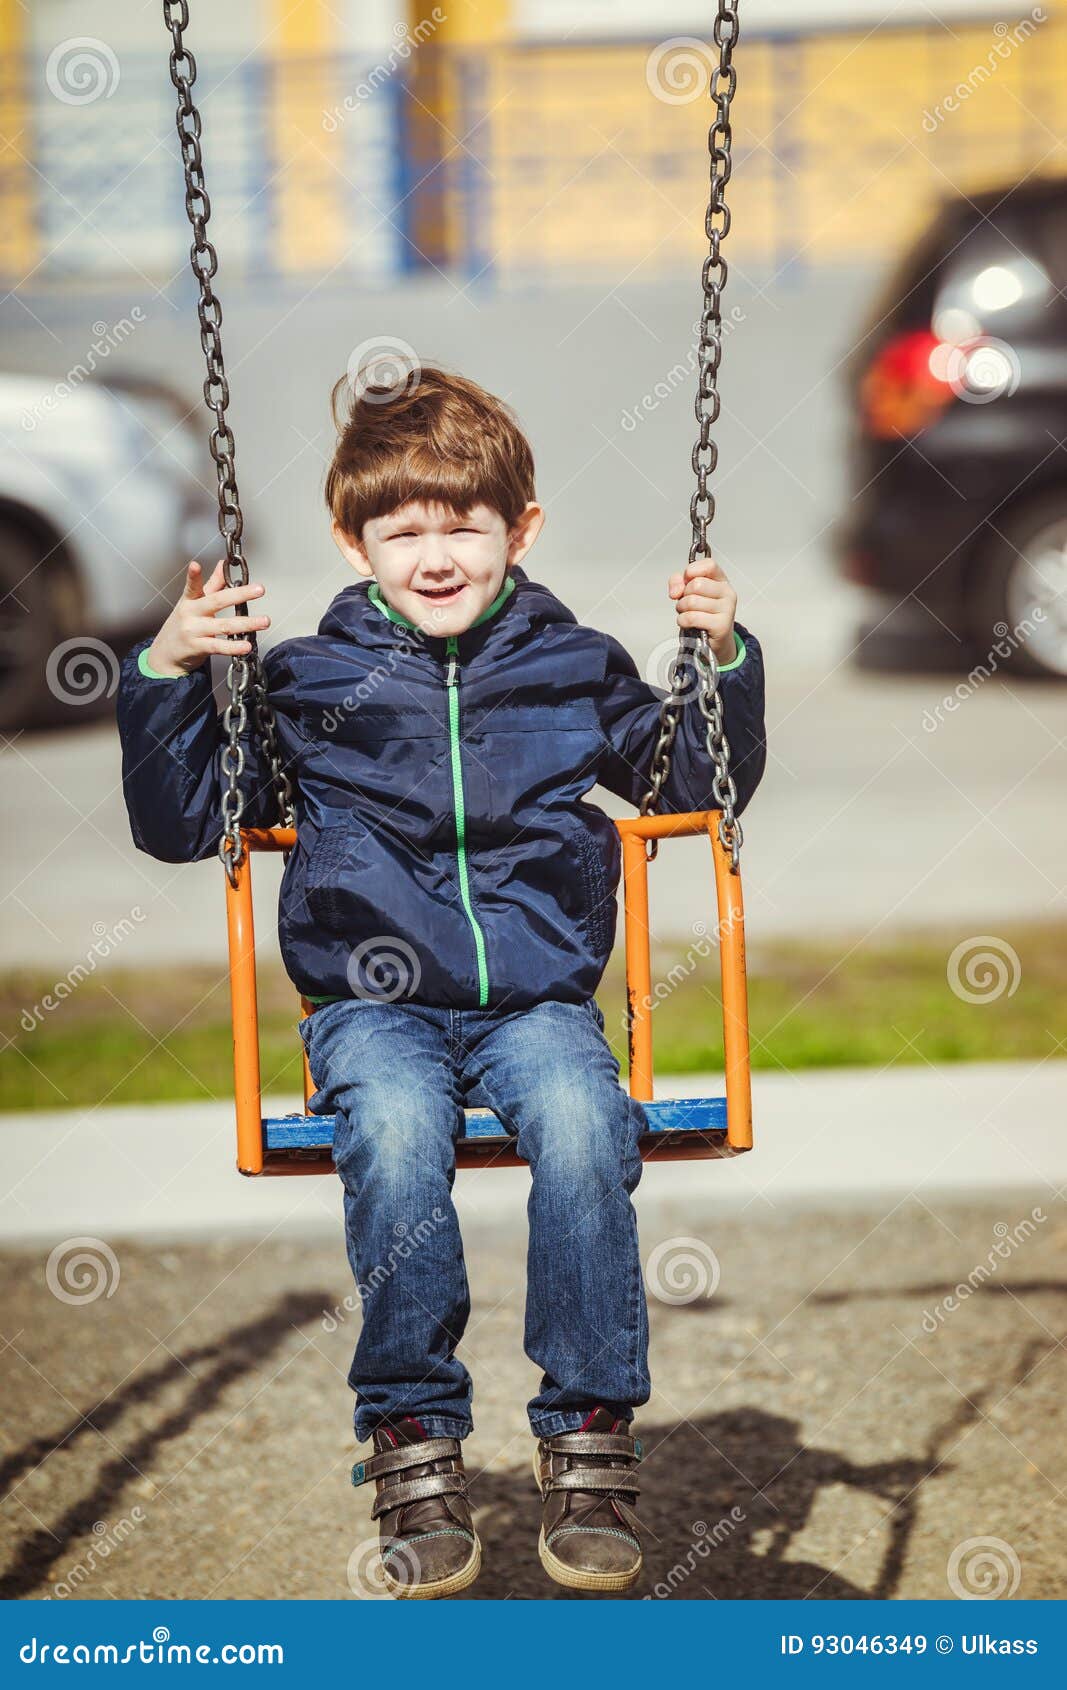 Child enjoy on swing, spring outdoors. Little boy enjoy on swing, spring outdoors.